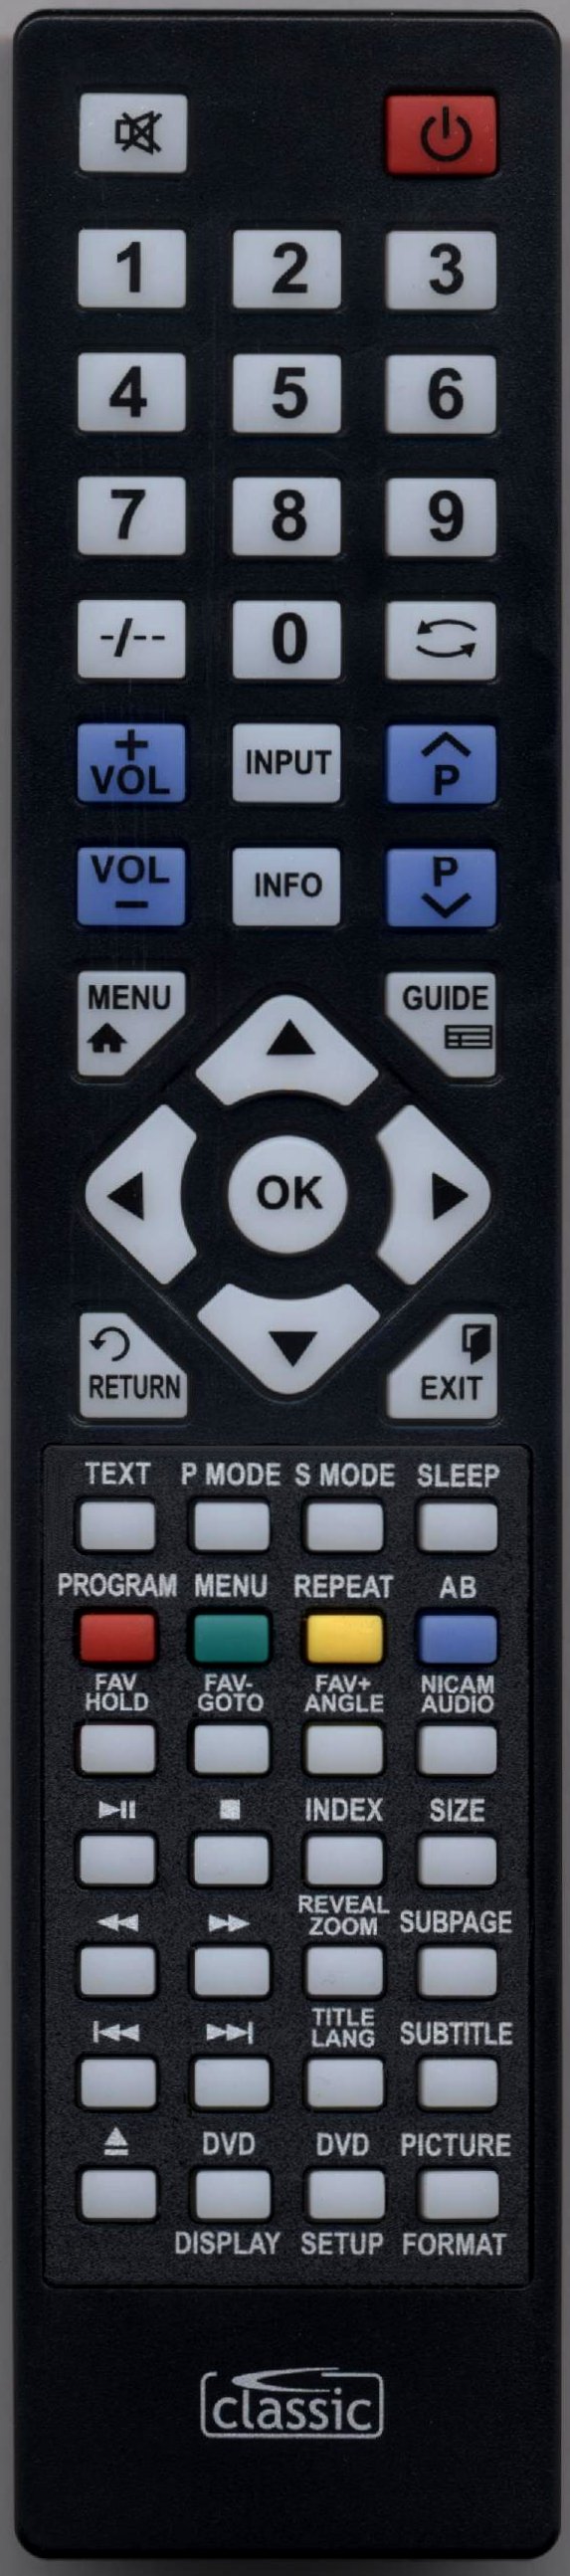 UMC X19/18-GB-TCD-UK Remote Control